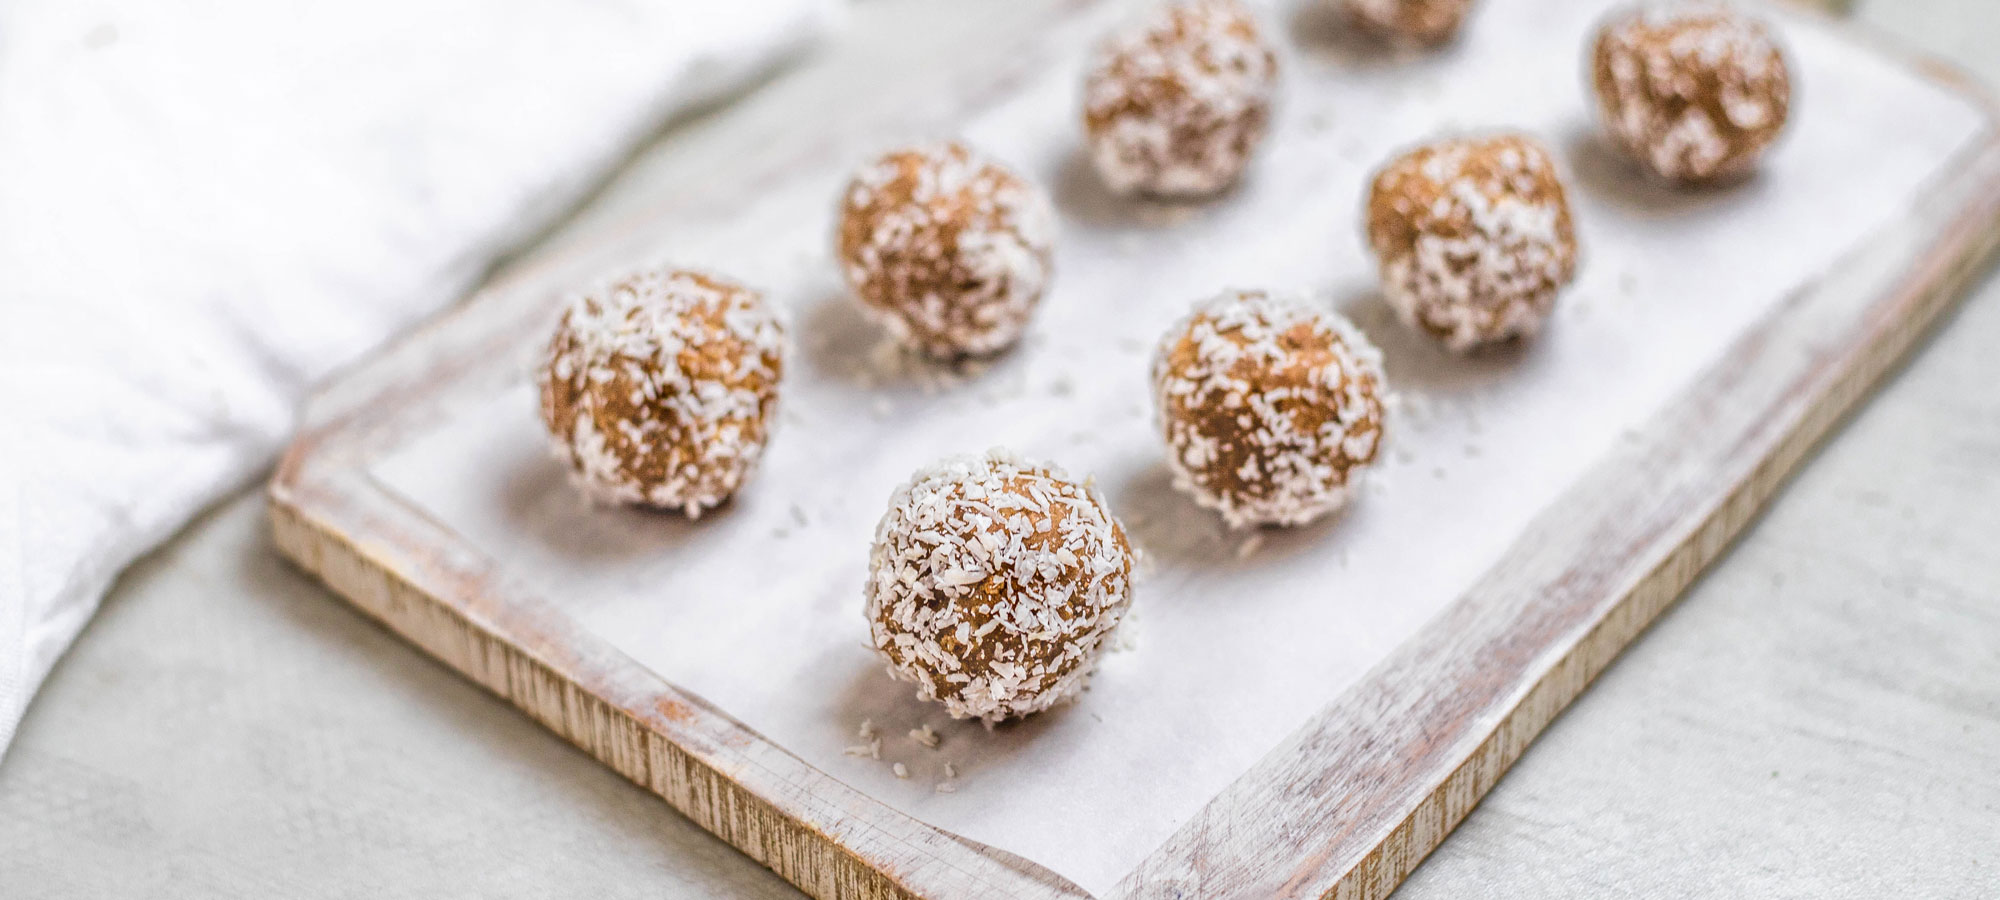 Coconut almond protein balls